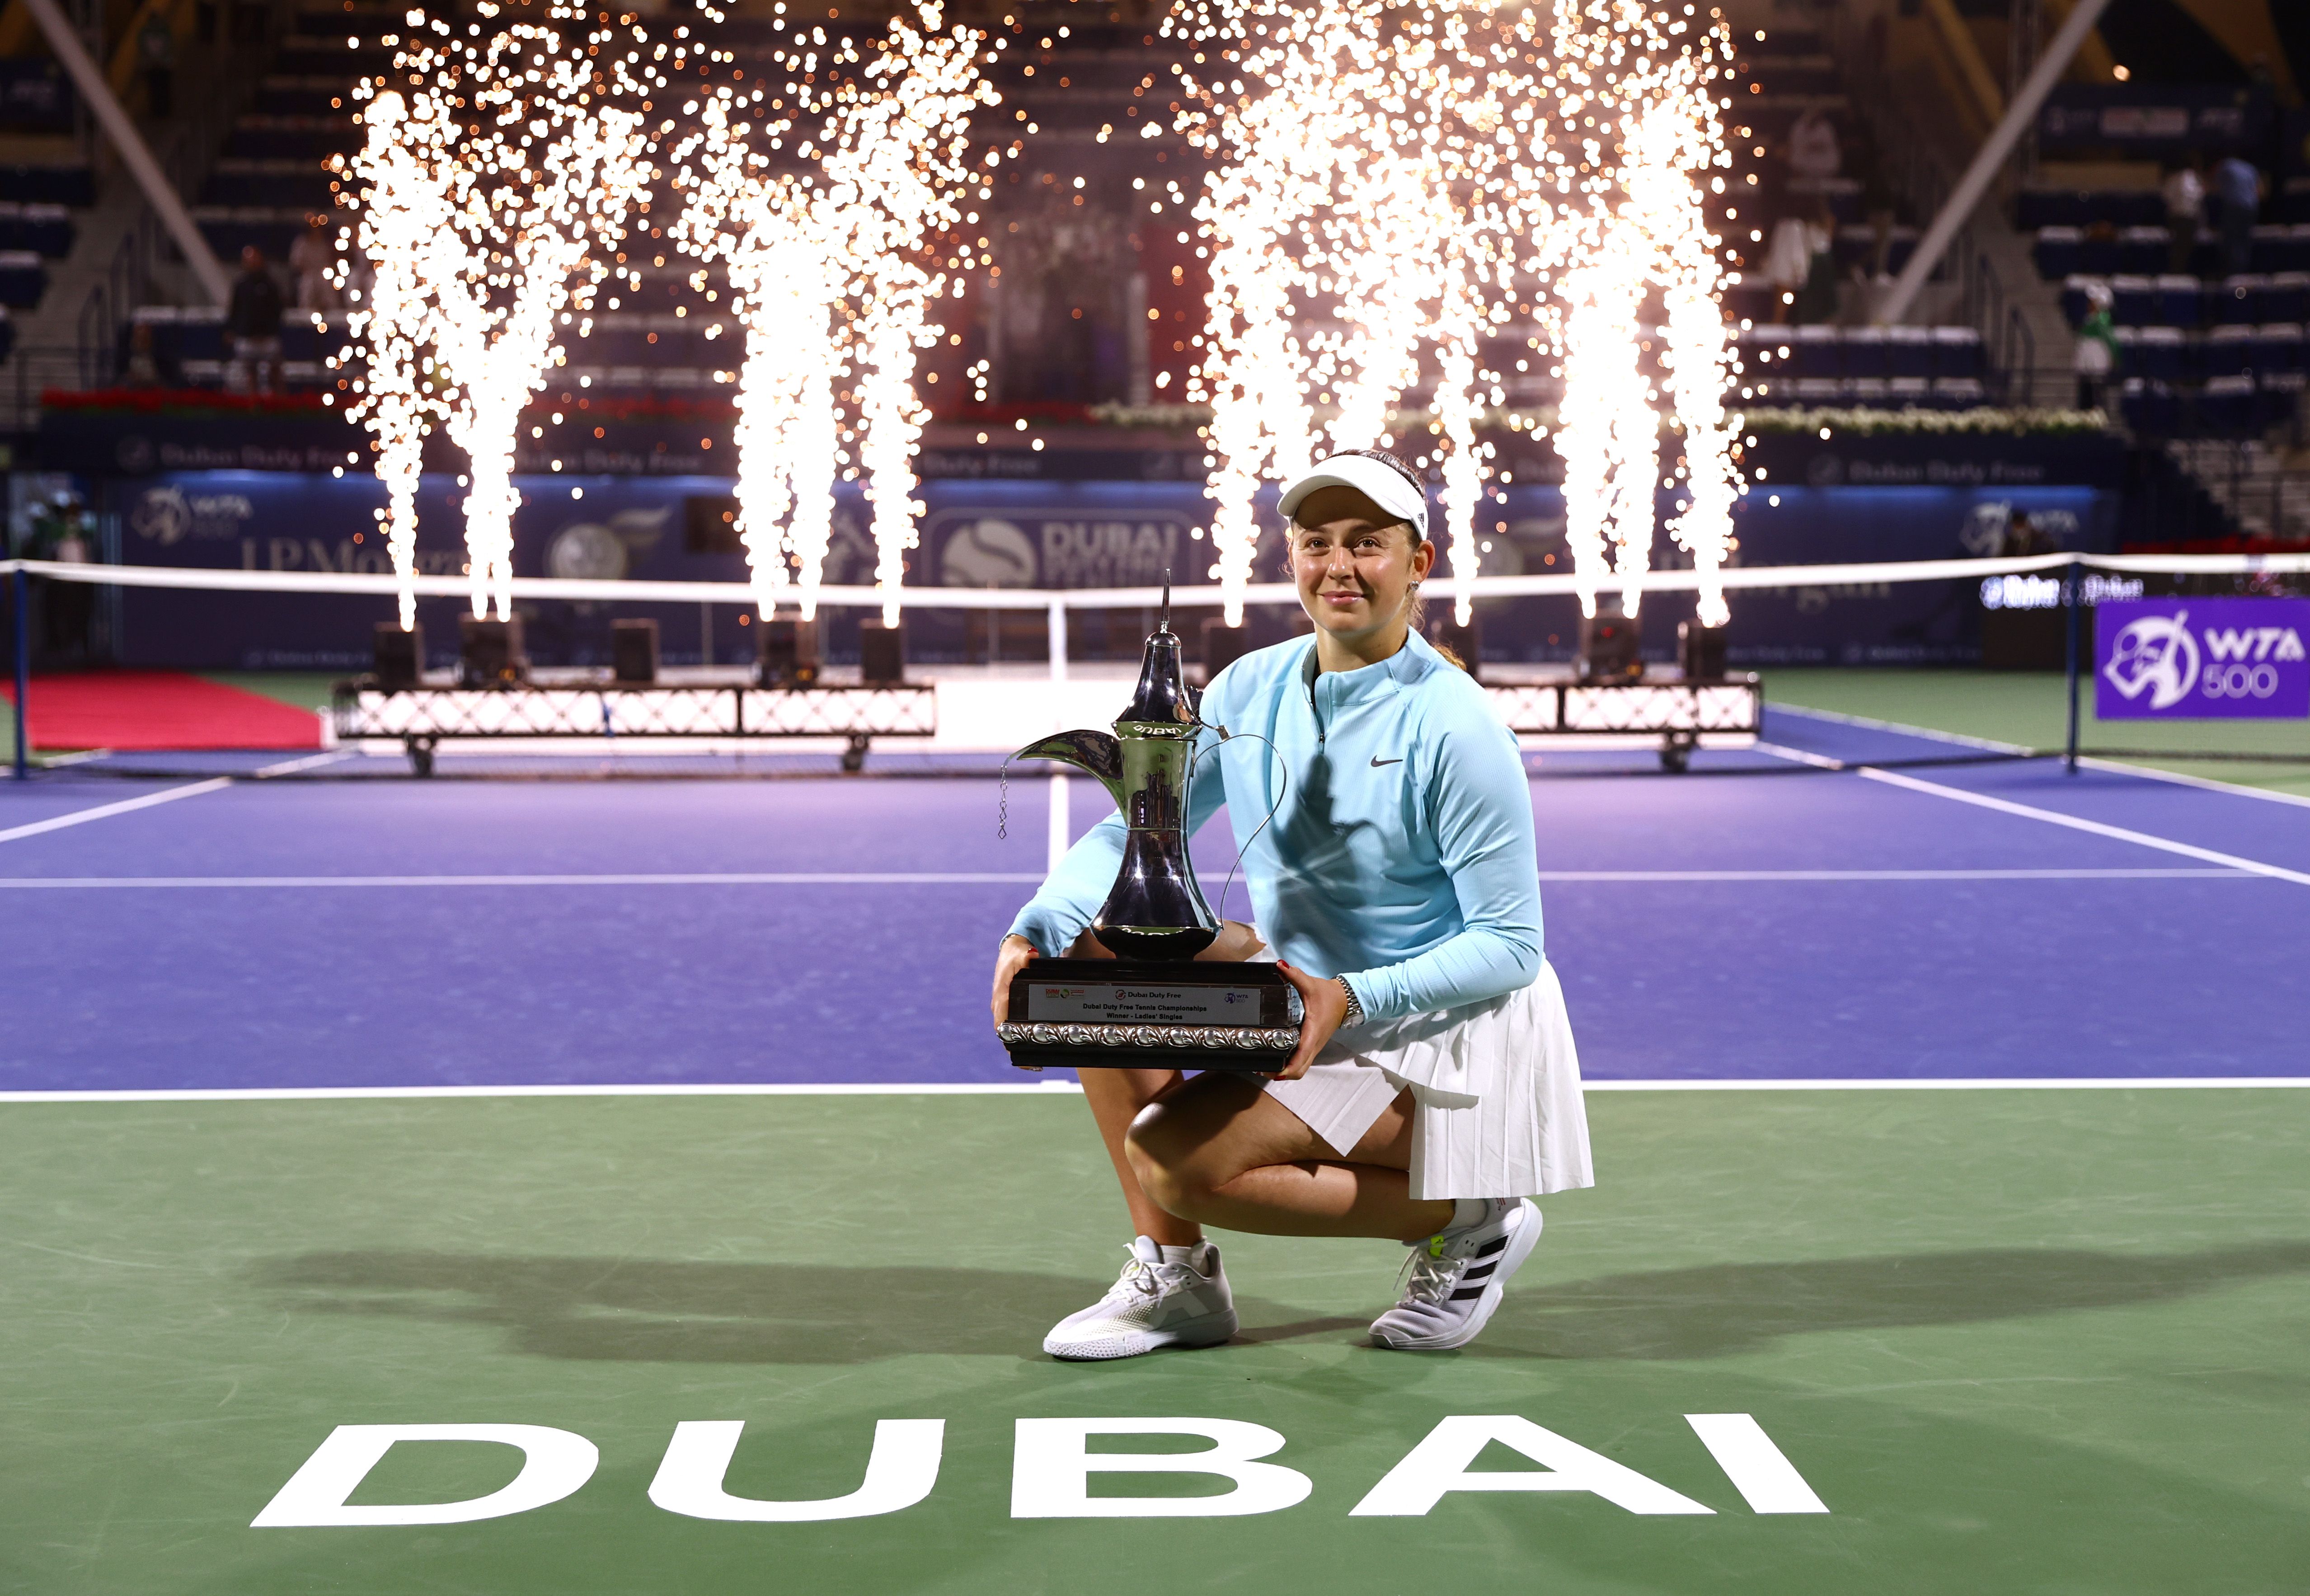 WTA Dubai latest results, Tennis WTA - Singles 